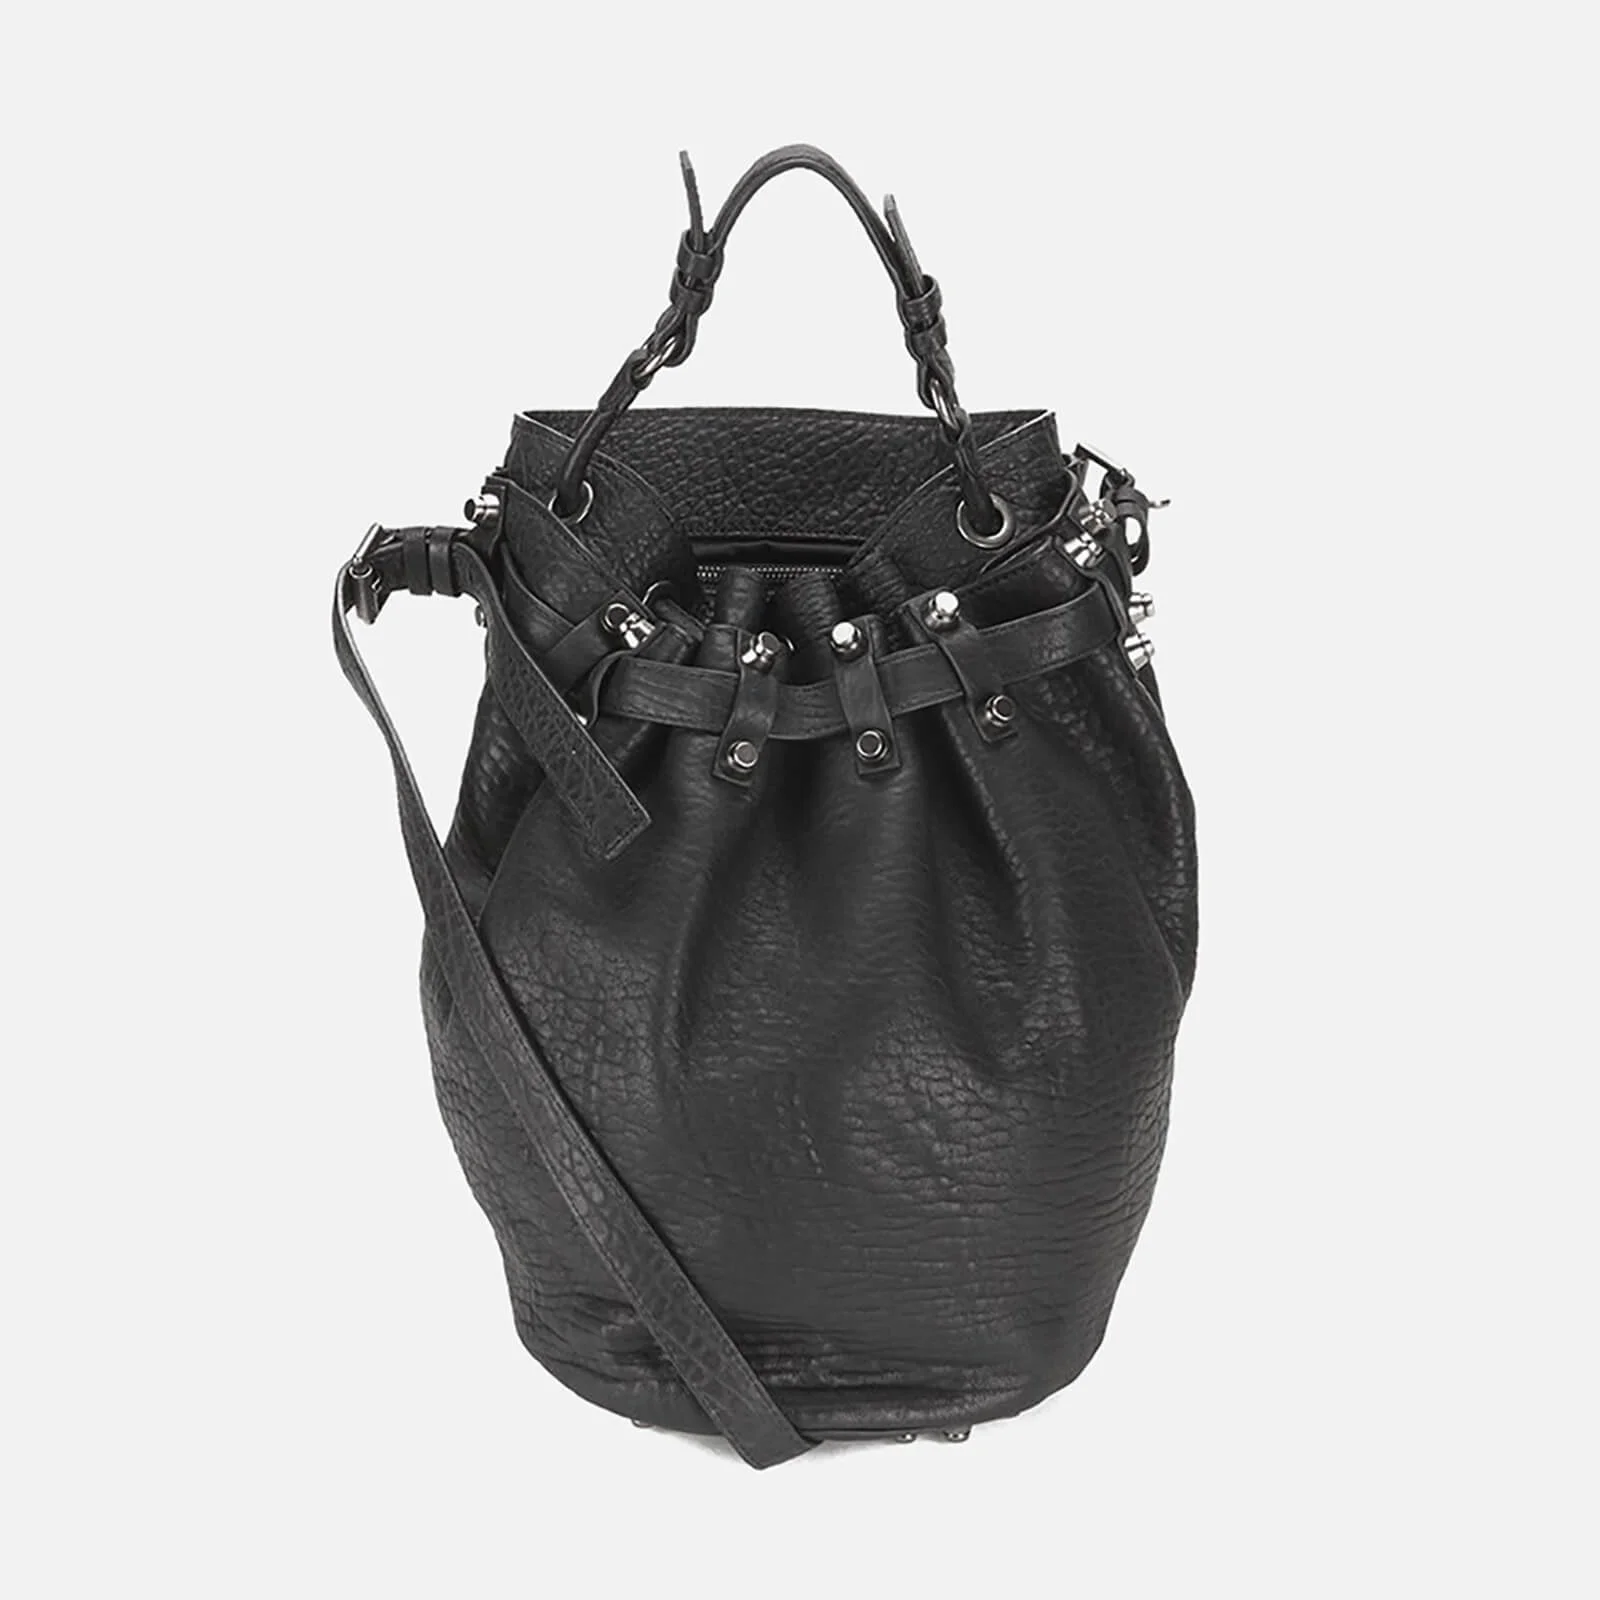 Alexander Wang Women's Diego Pebble Leather Bag - Black/Nickel Hardware Image 1